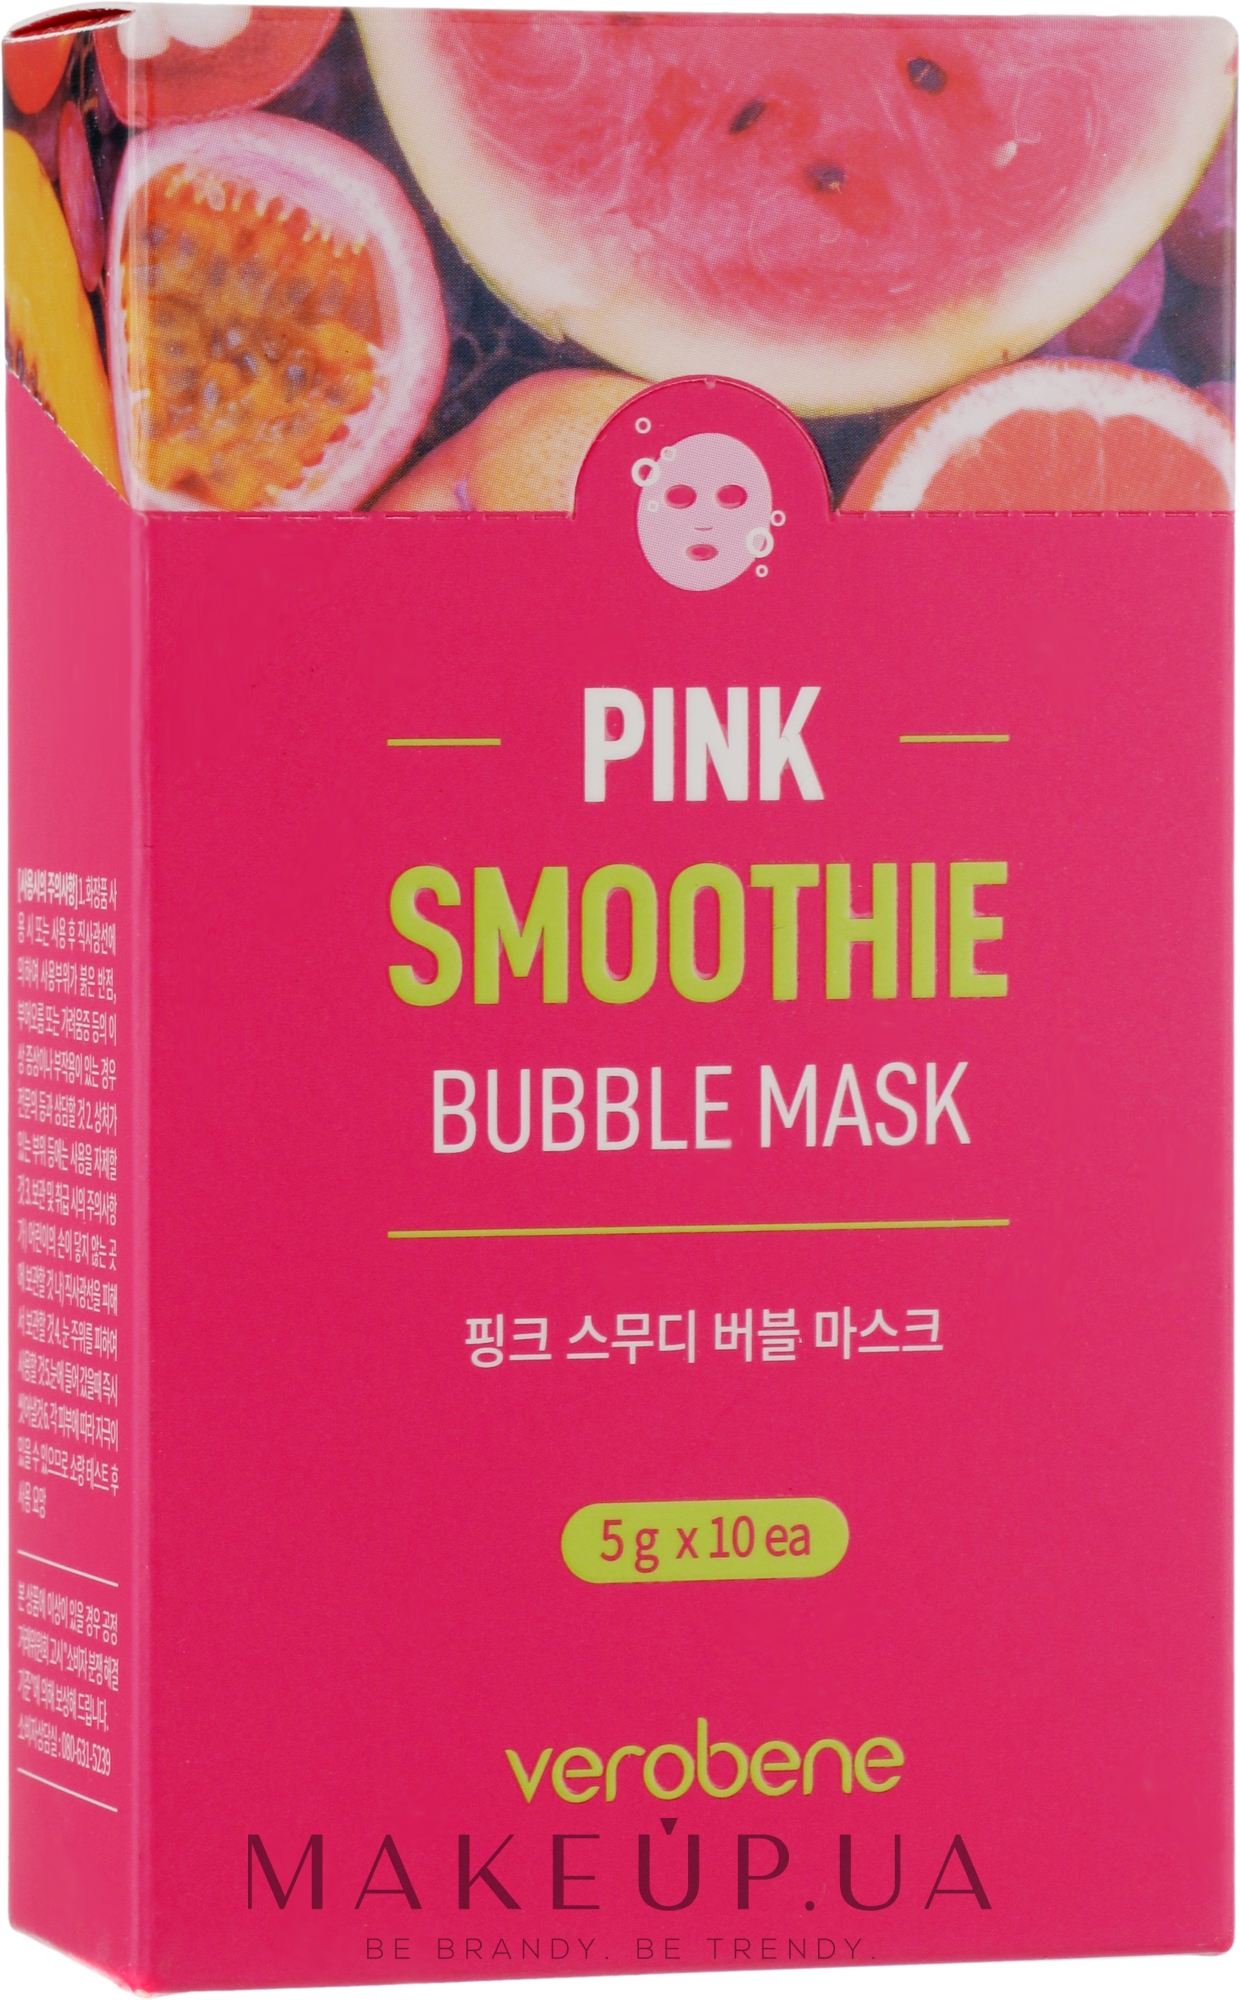 Кислородная маска-смузи с розовым коктейлем - Verobene Pink Smoothie Bubble Mask  — фото 10x5g